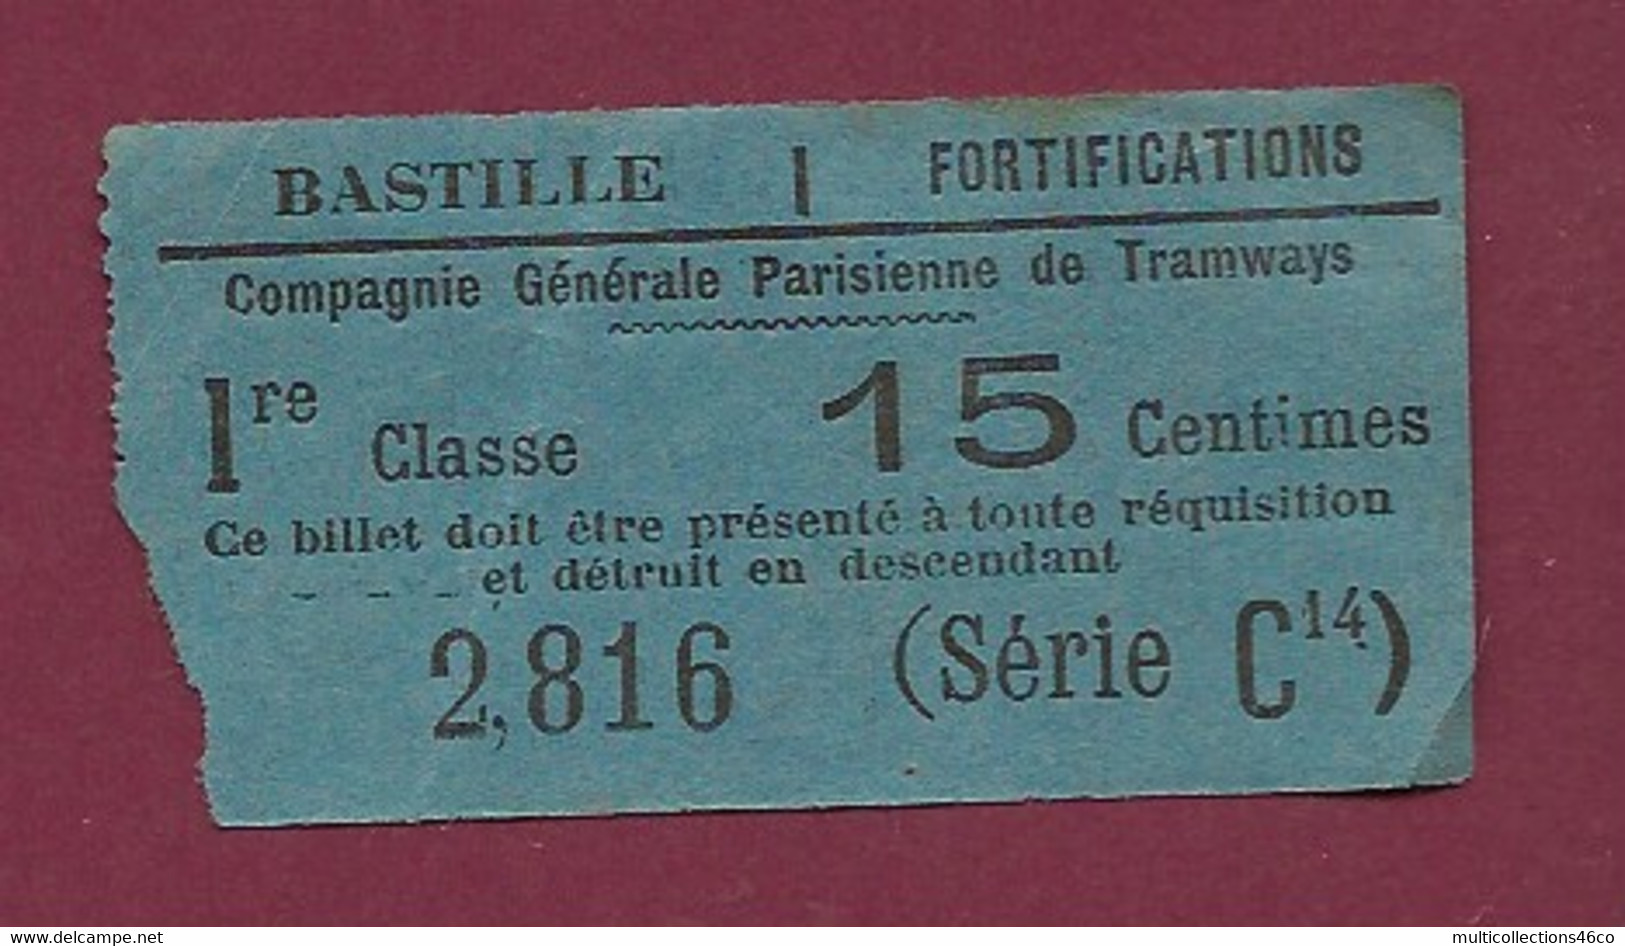 130121 - TICKET CHEMIN DE FER TRAM METRO - COMPAGNIE GENERALE PARISIENNE TRAMWAYS Bastille Fortifications 2816 série C14